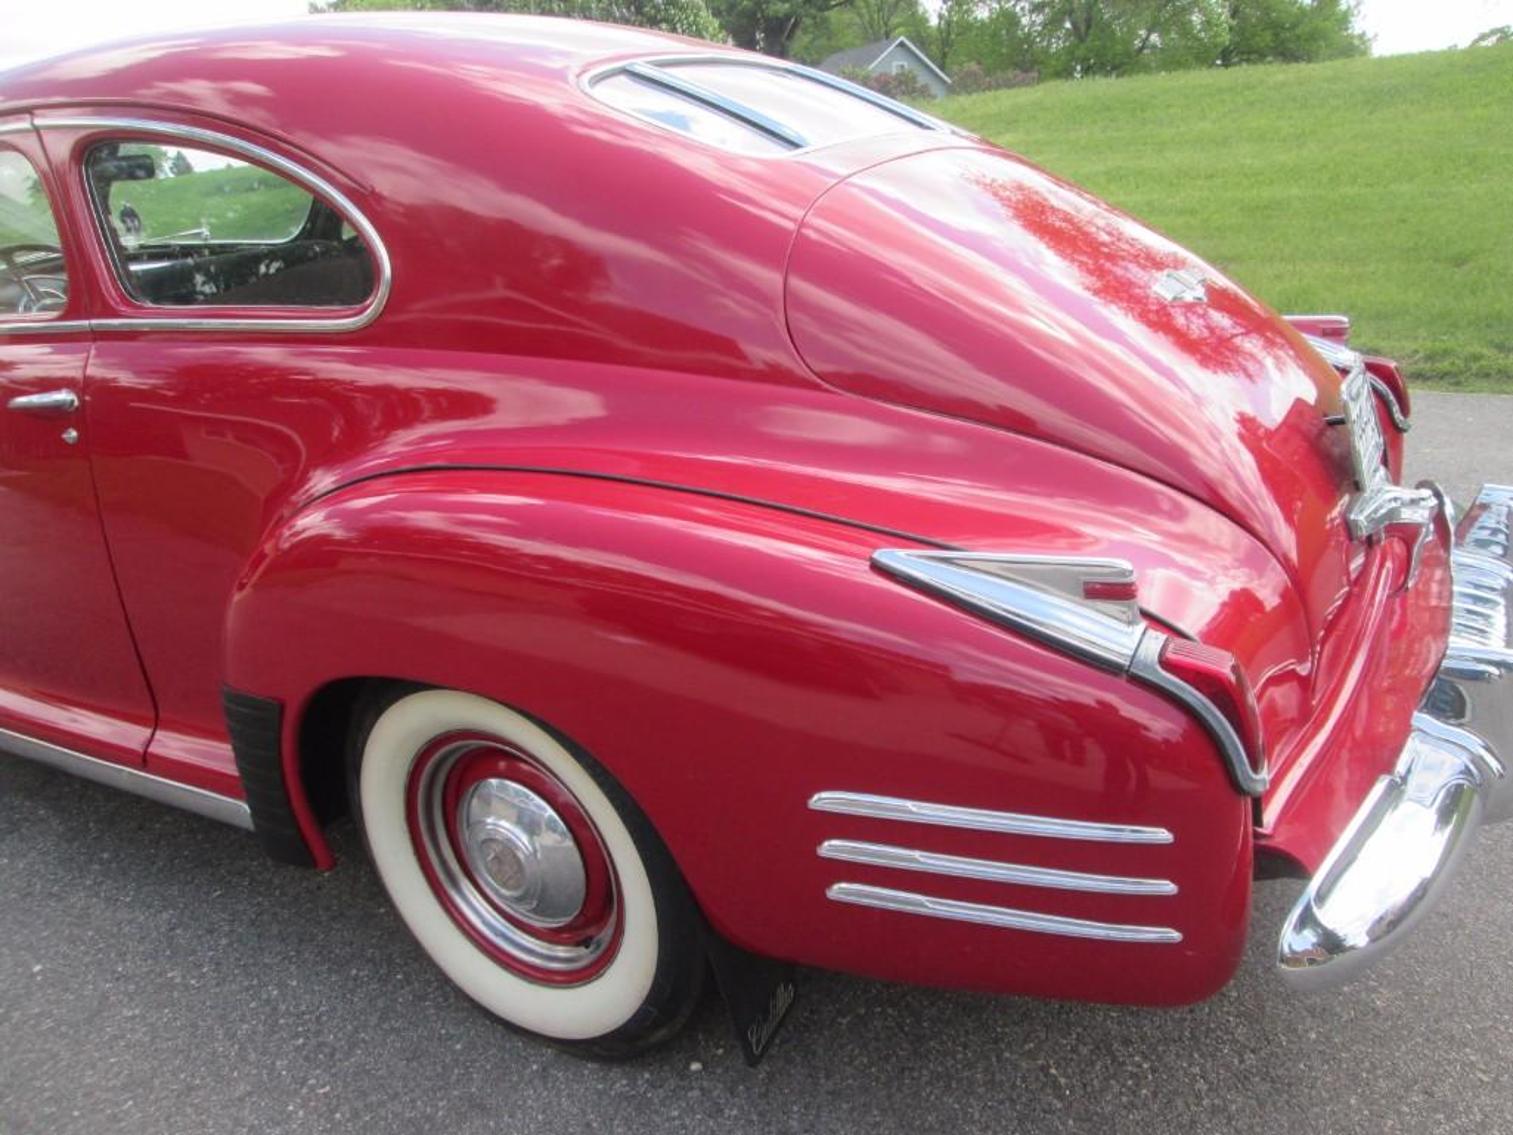 1941 Cadillac Car